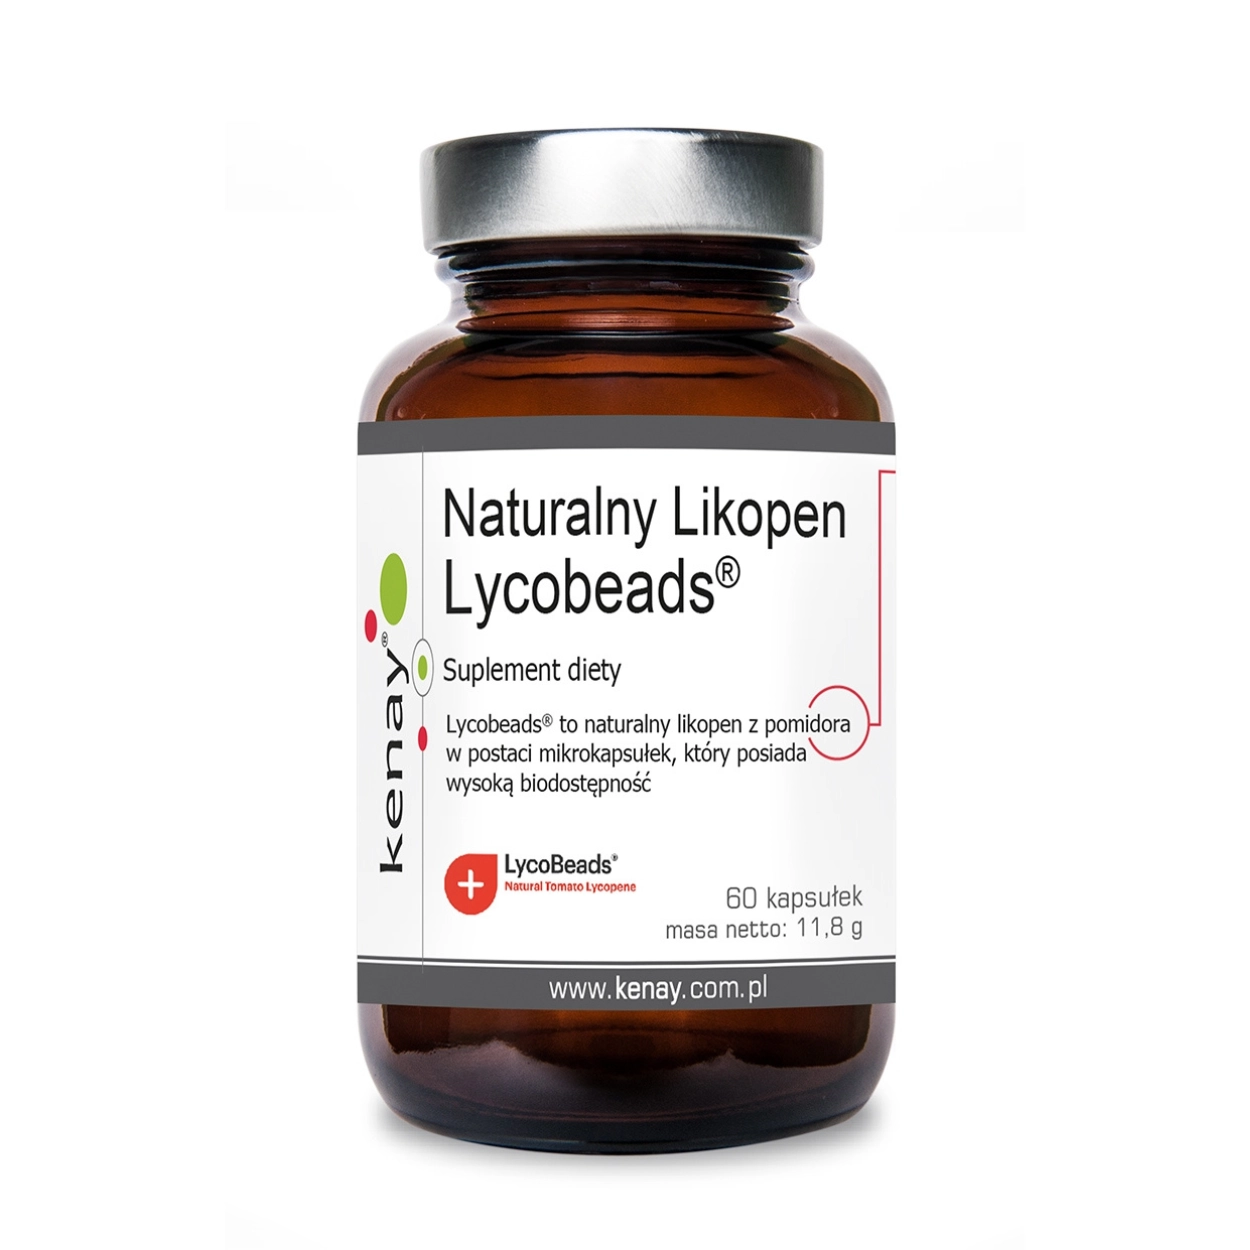 Naturalny Likopen Lycobeads® (60 kapsułek) – suplement diety